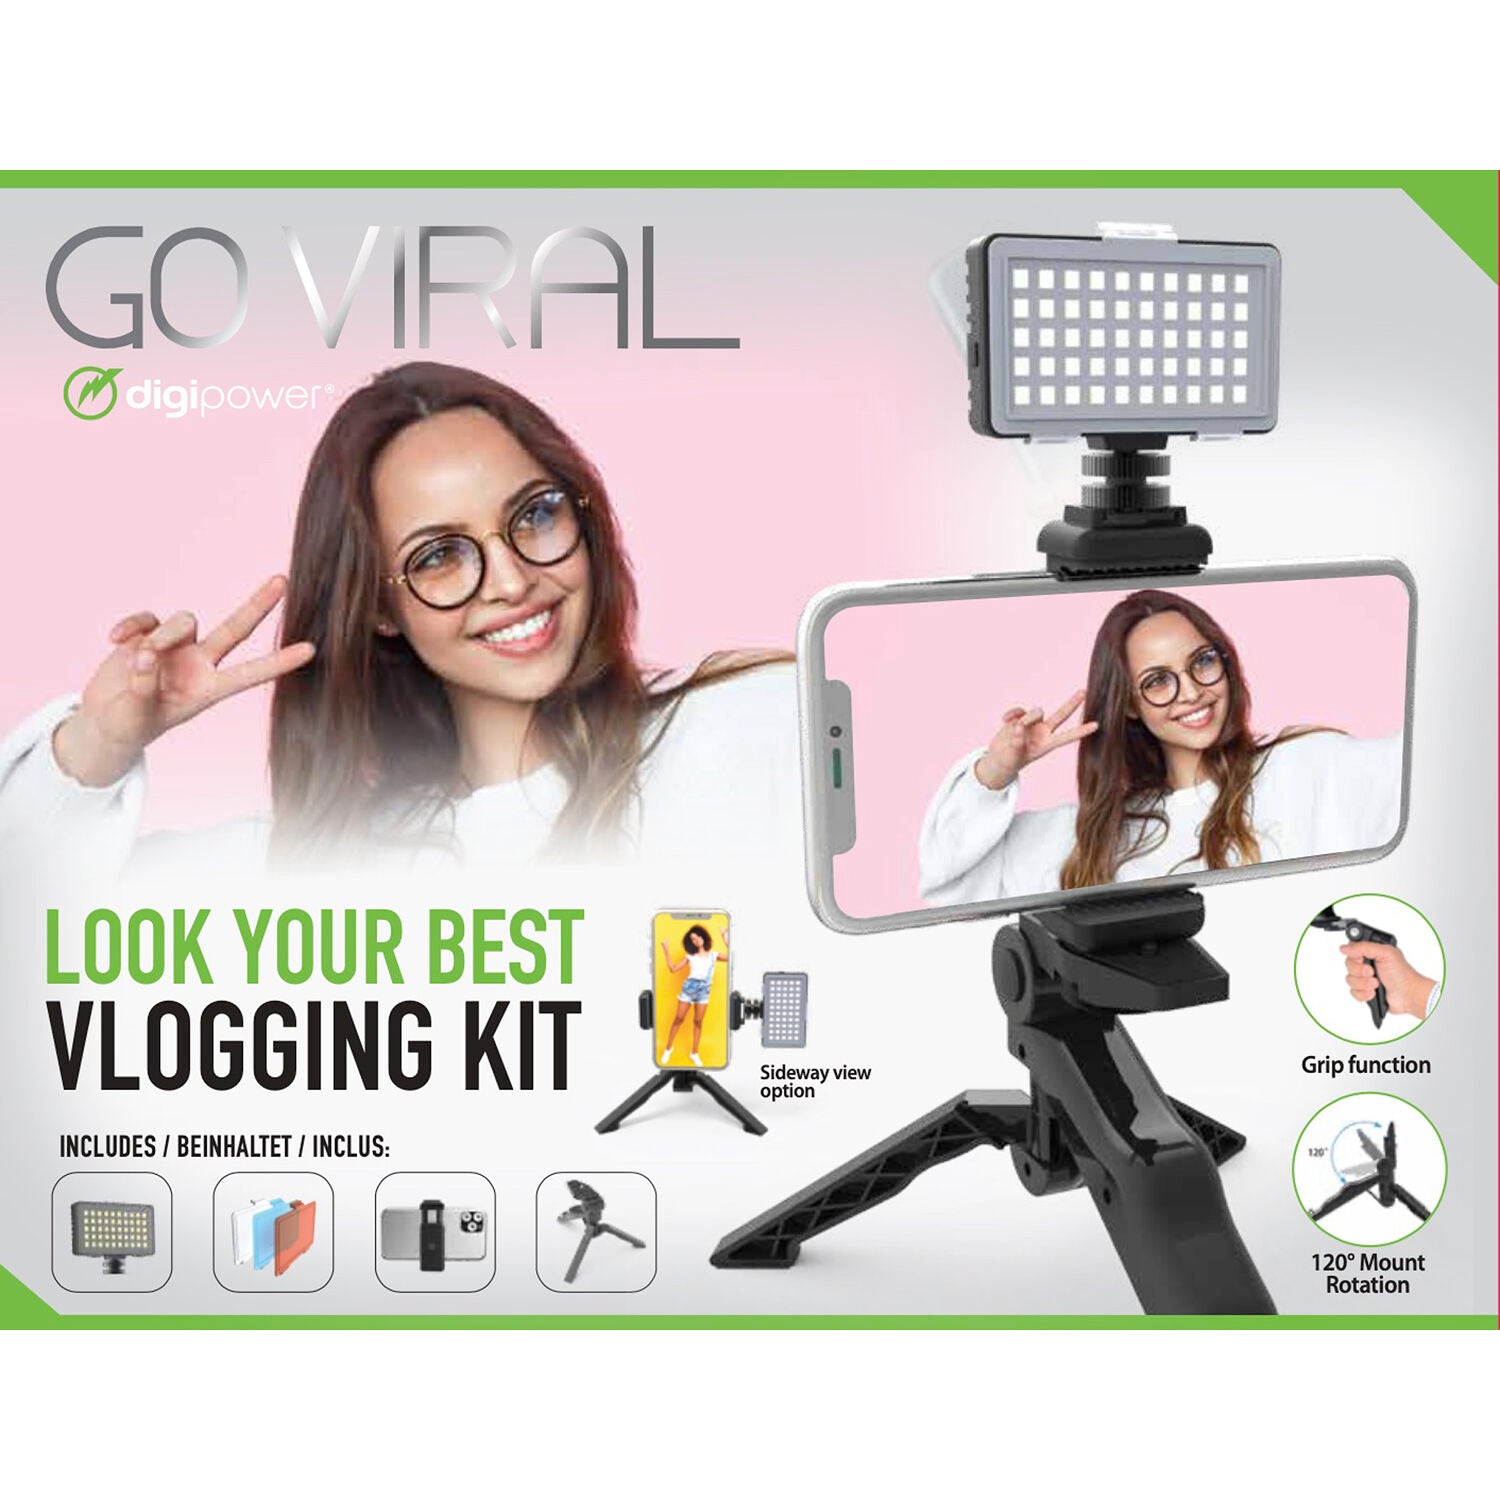 Digipower Go Viral Look Your Best Vlogging Kit